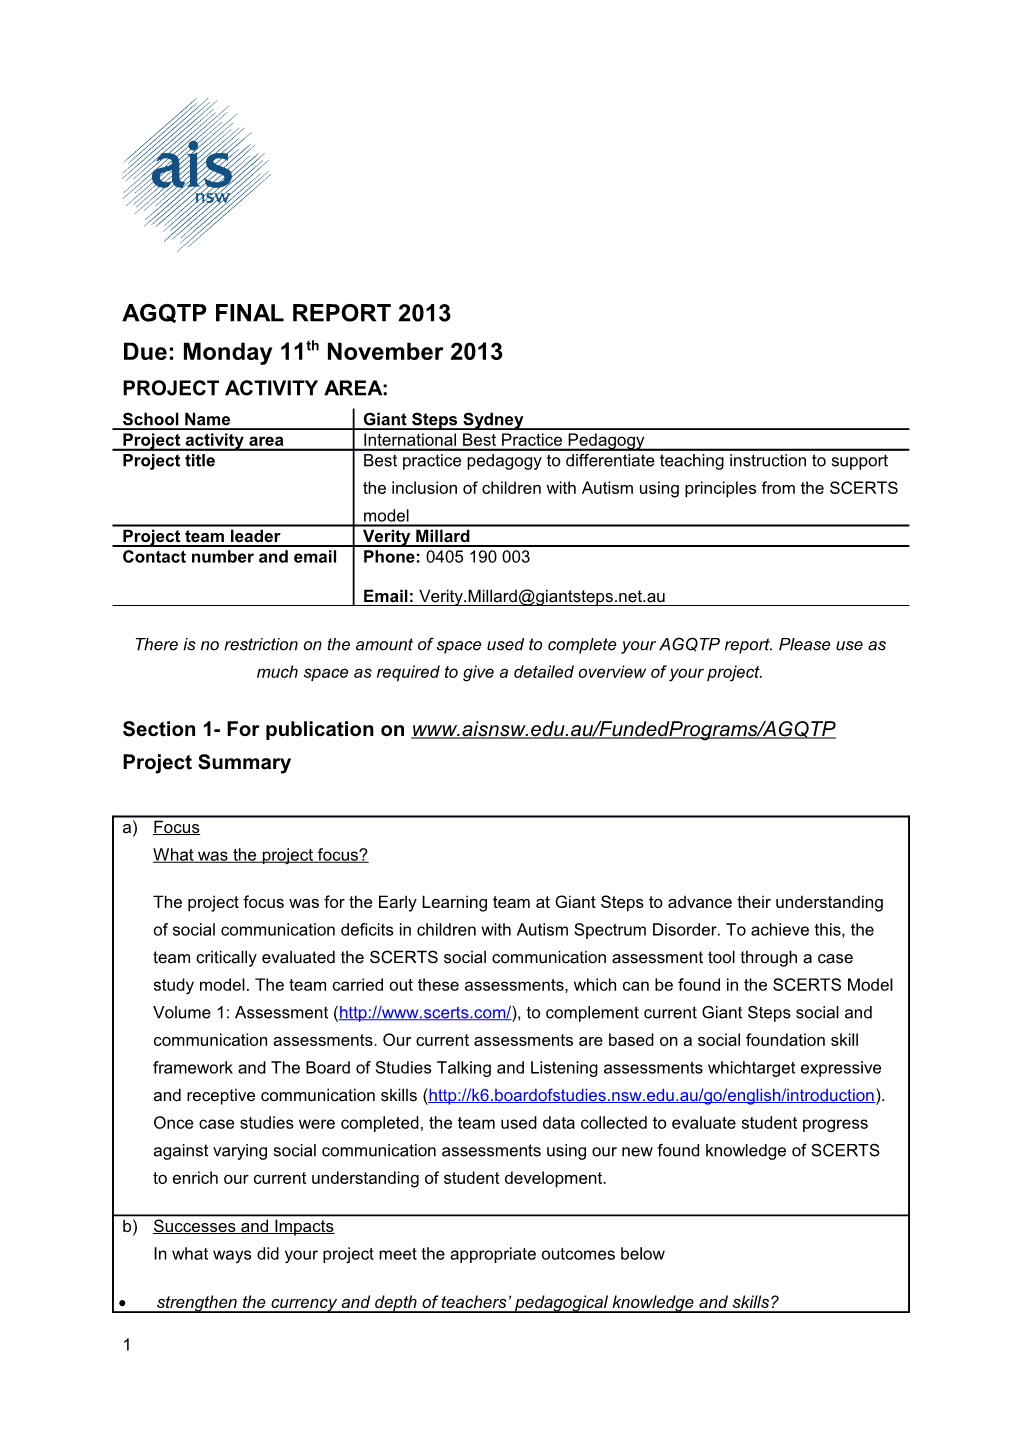 AGQTP Final Report 2012